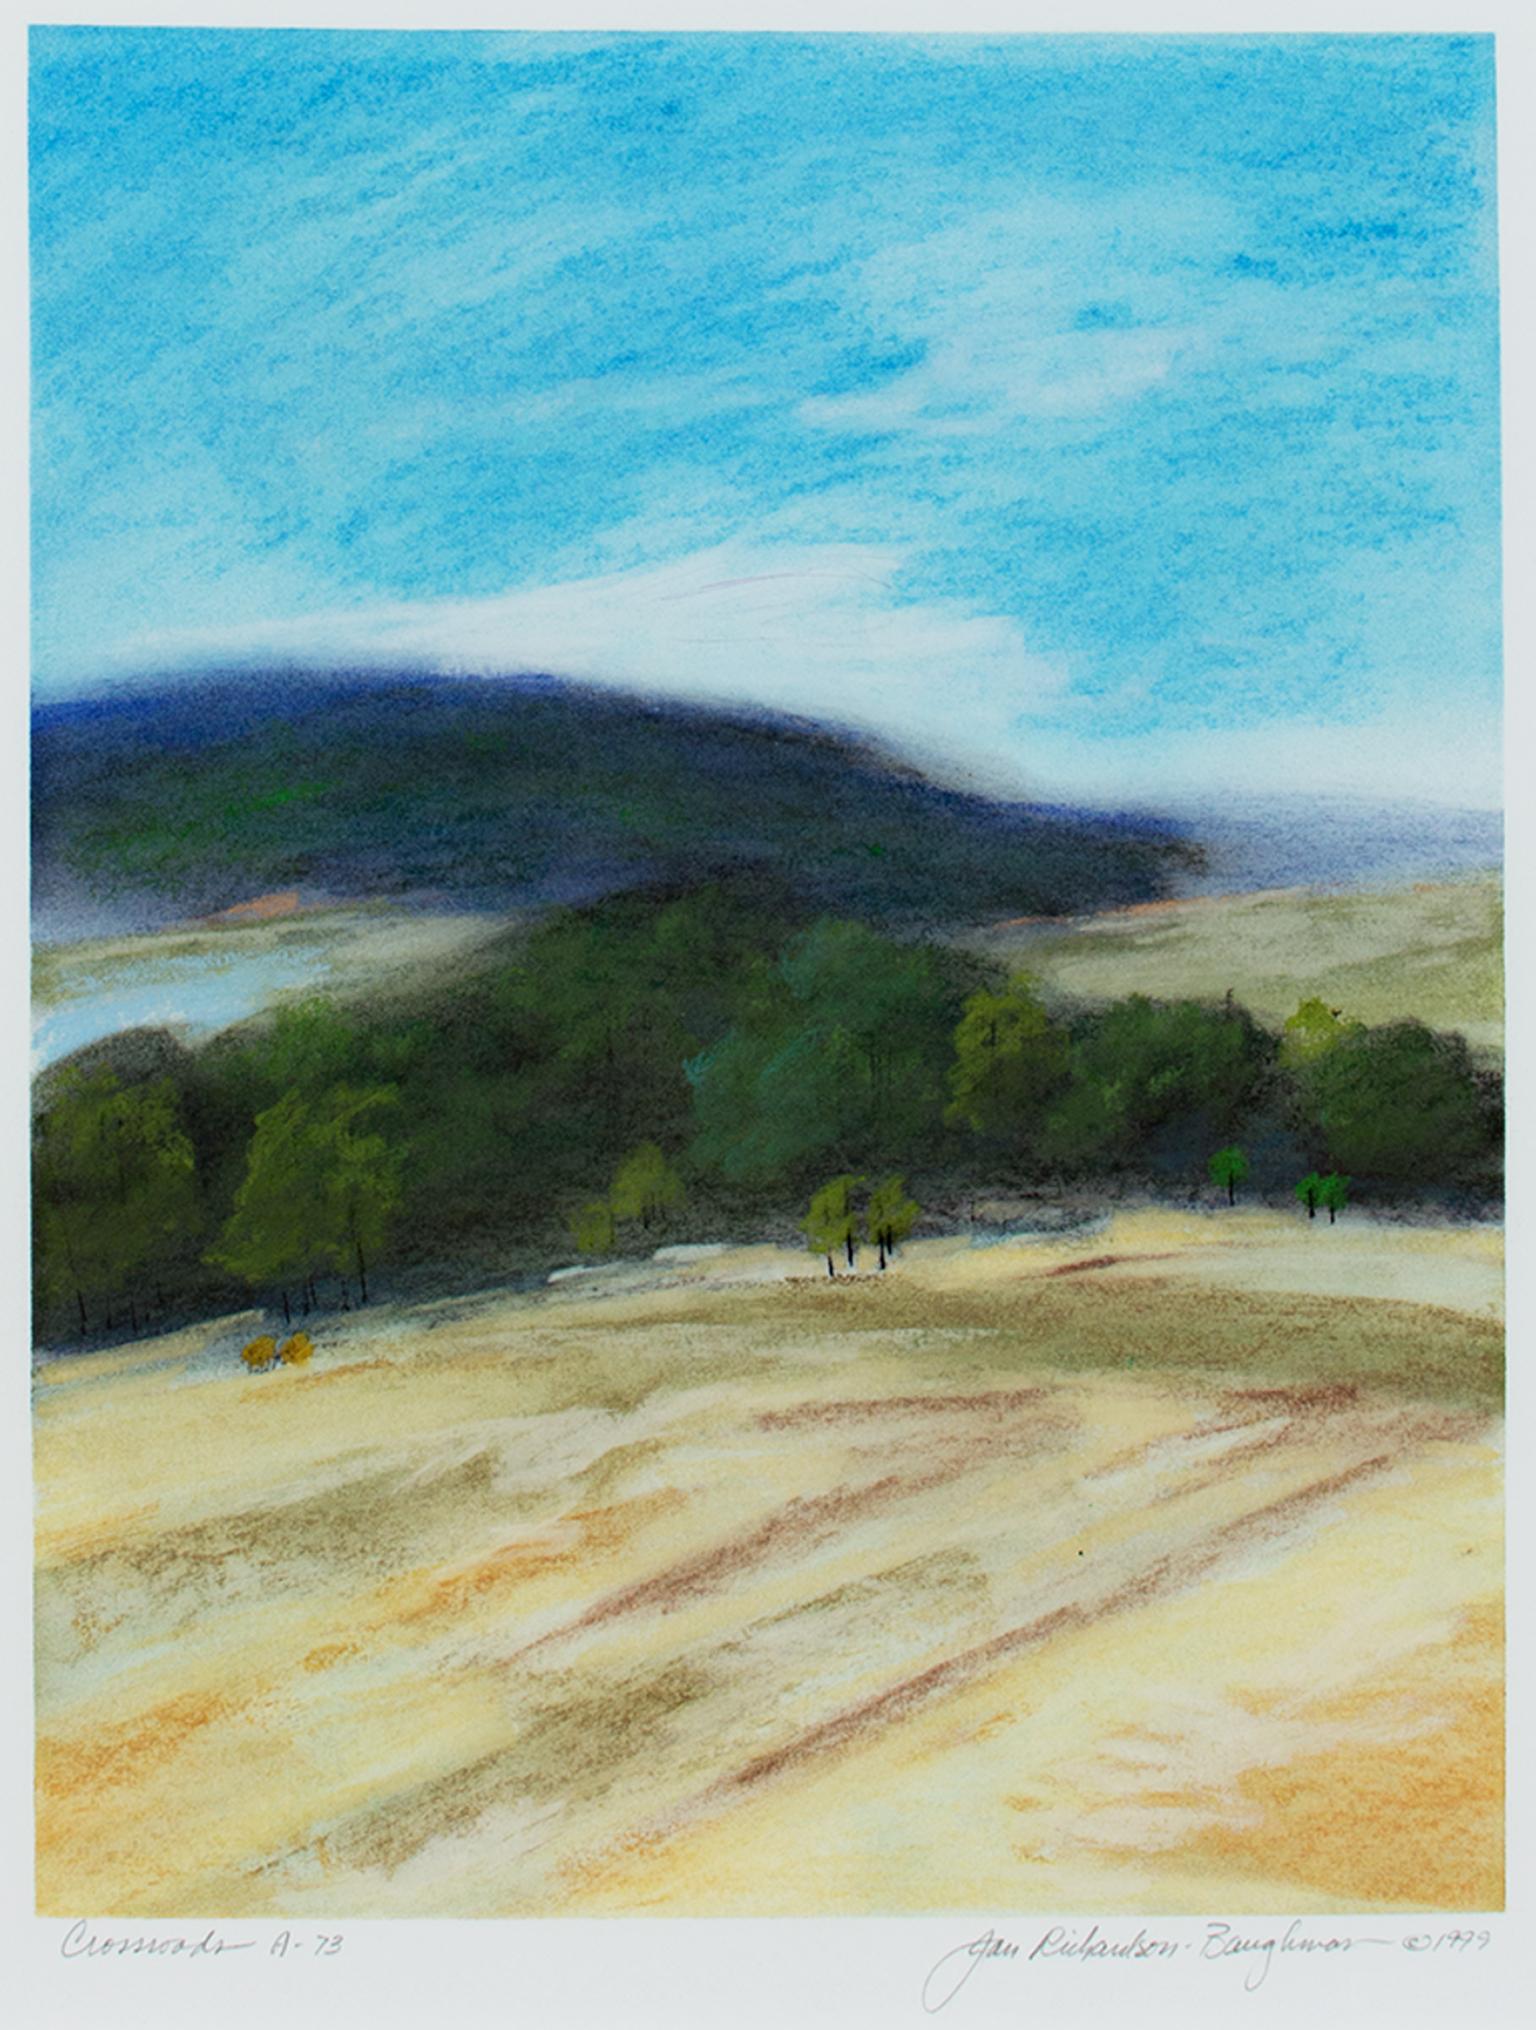 "Crossroads A-73, " Hazy Pastel Landscape signed by Jan Richardson-Baughman